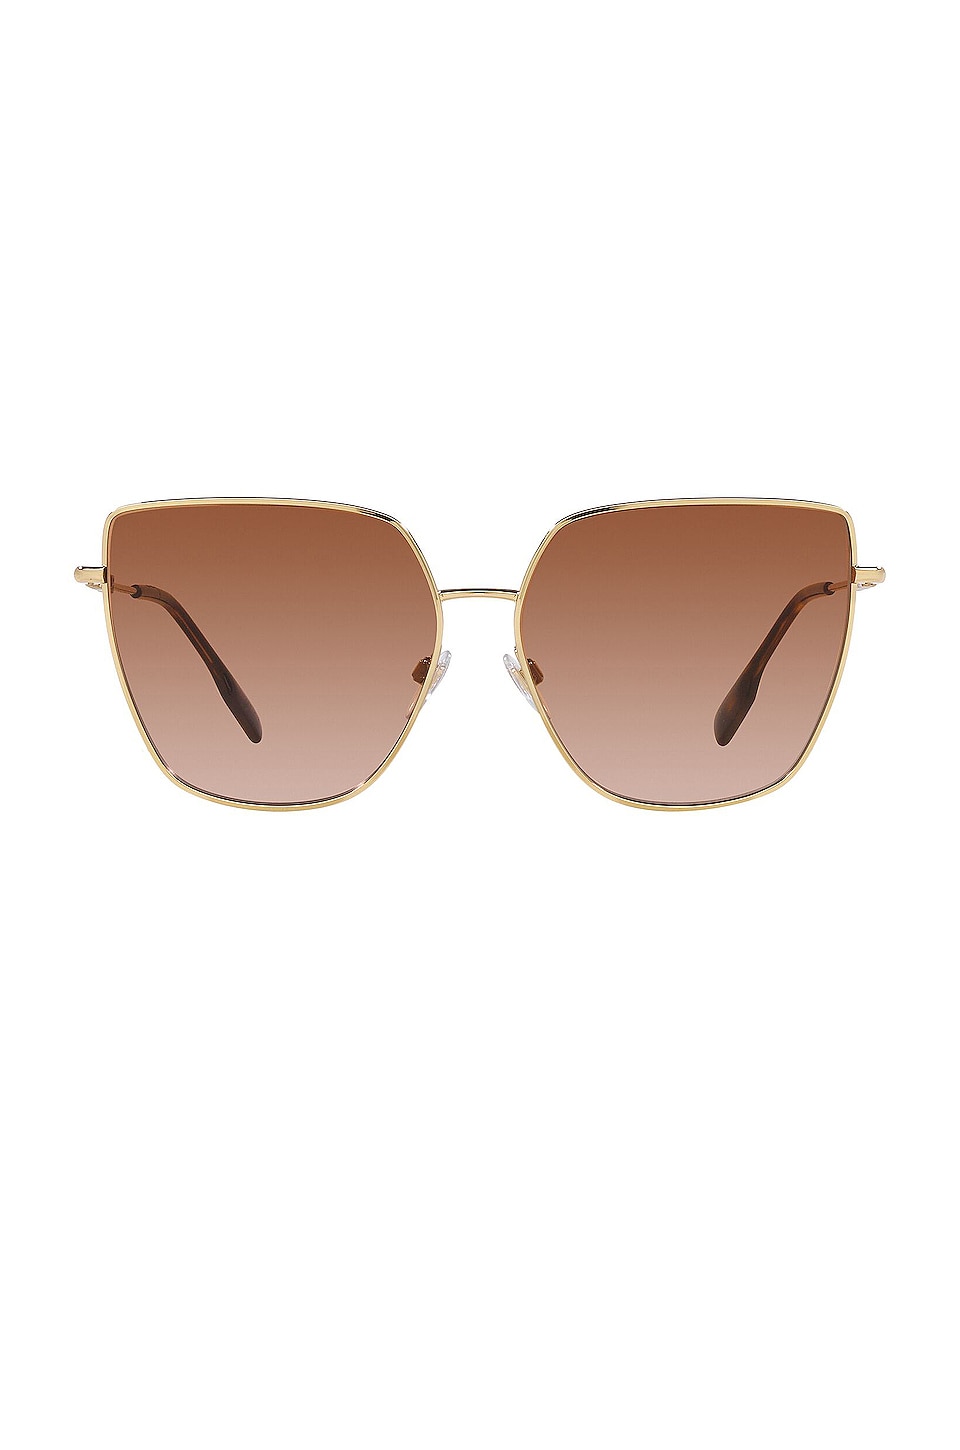 Burberry Alexis Sunglasses in Gold | REVOLVE